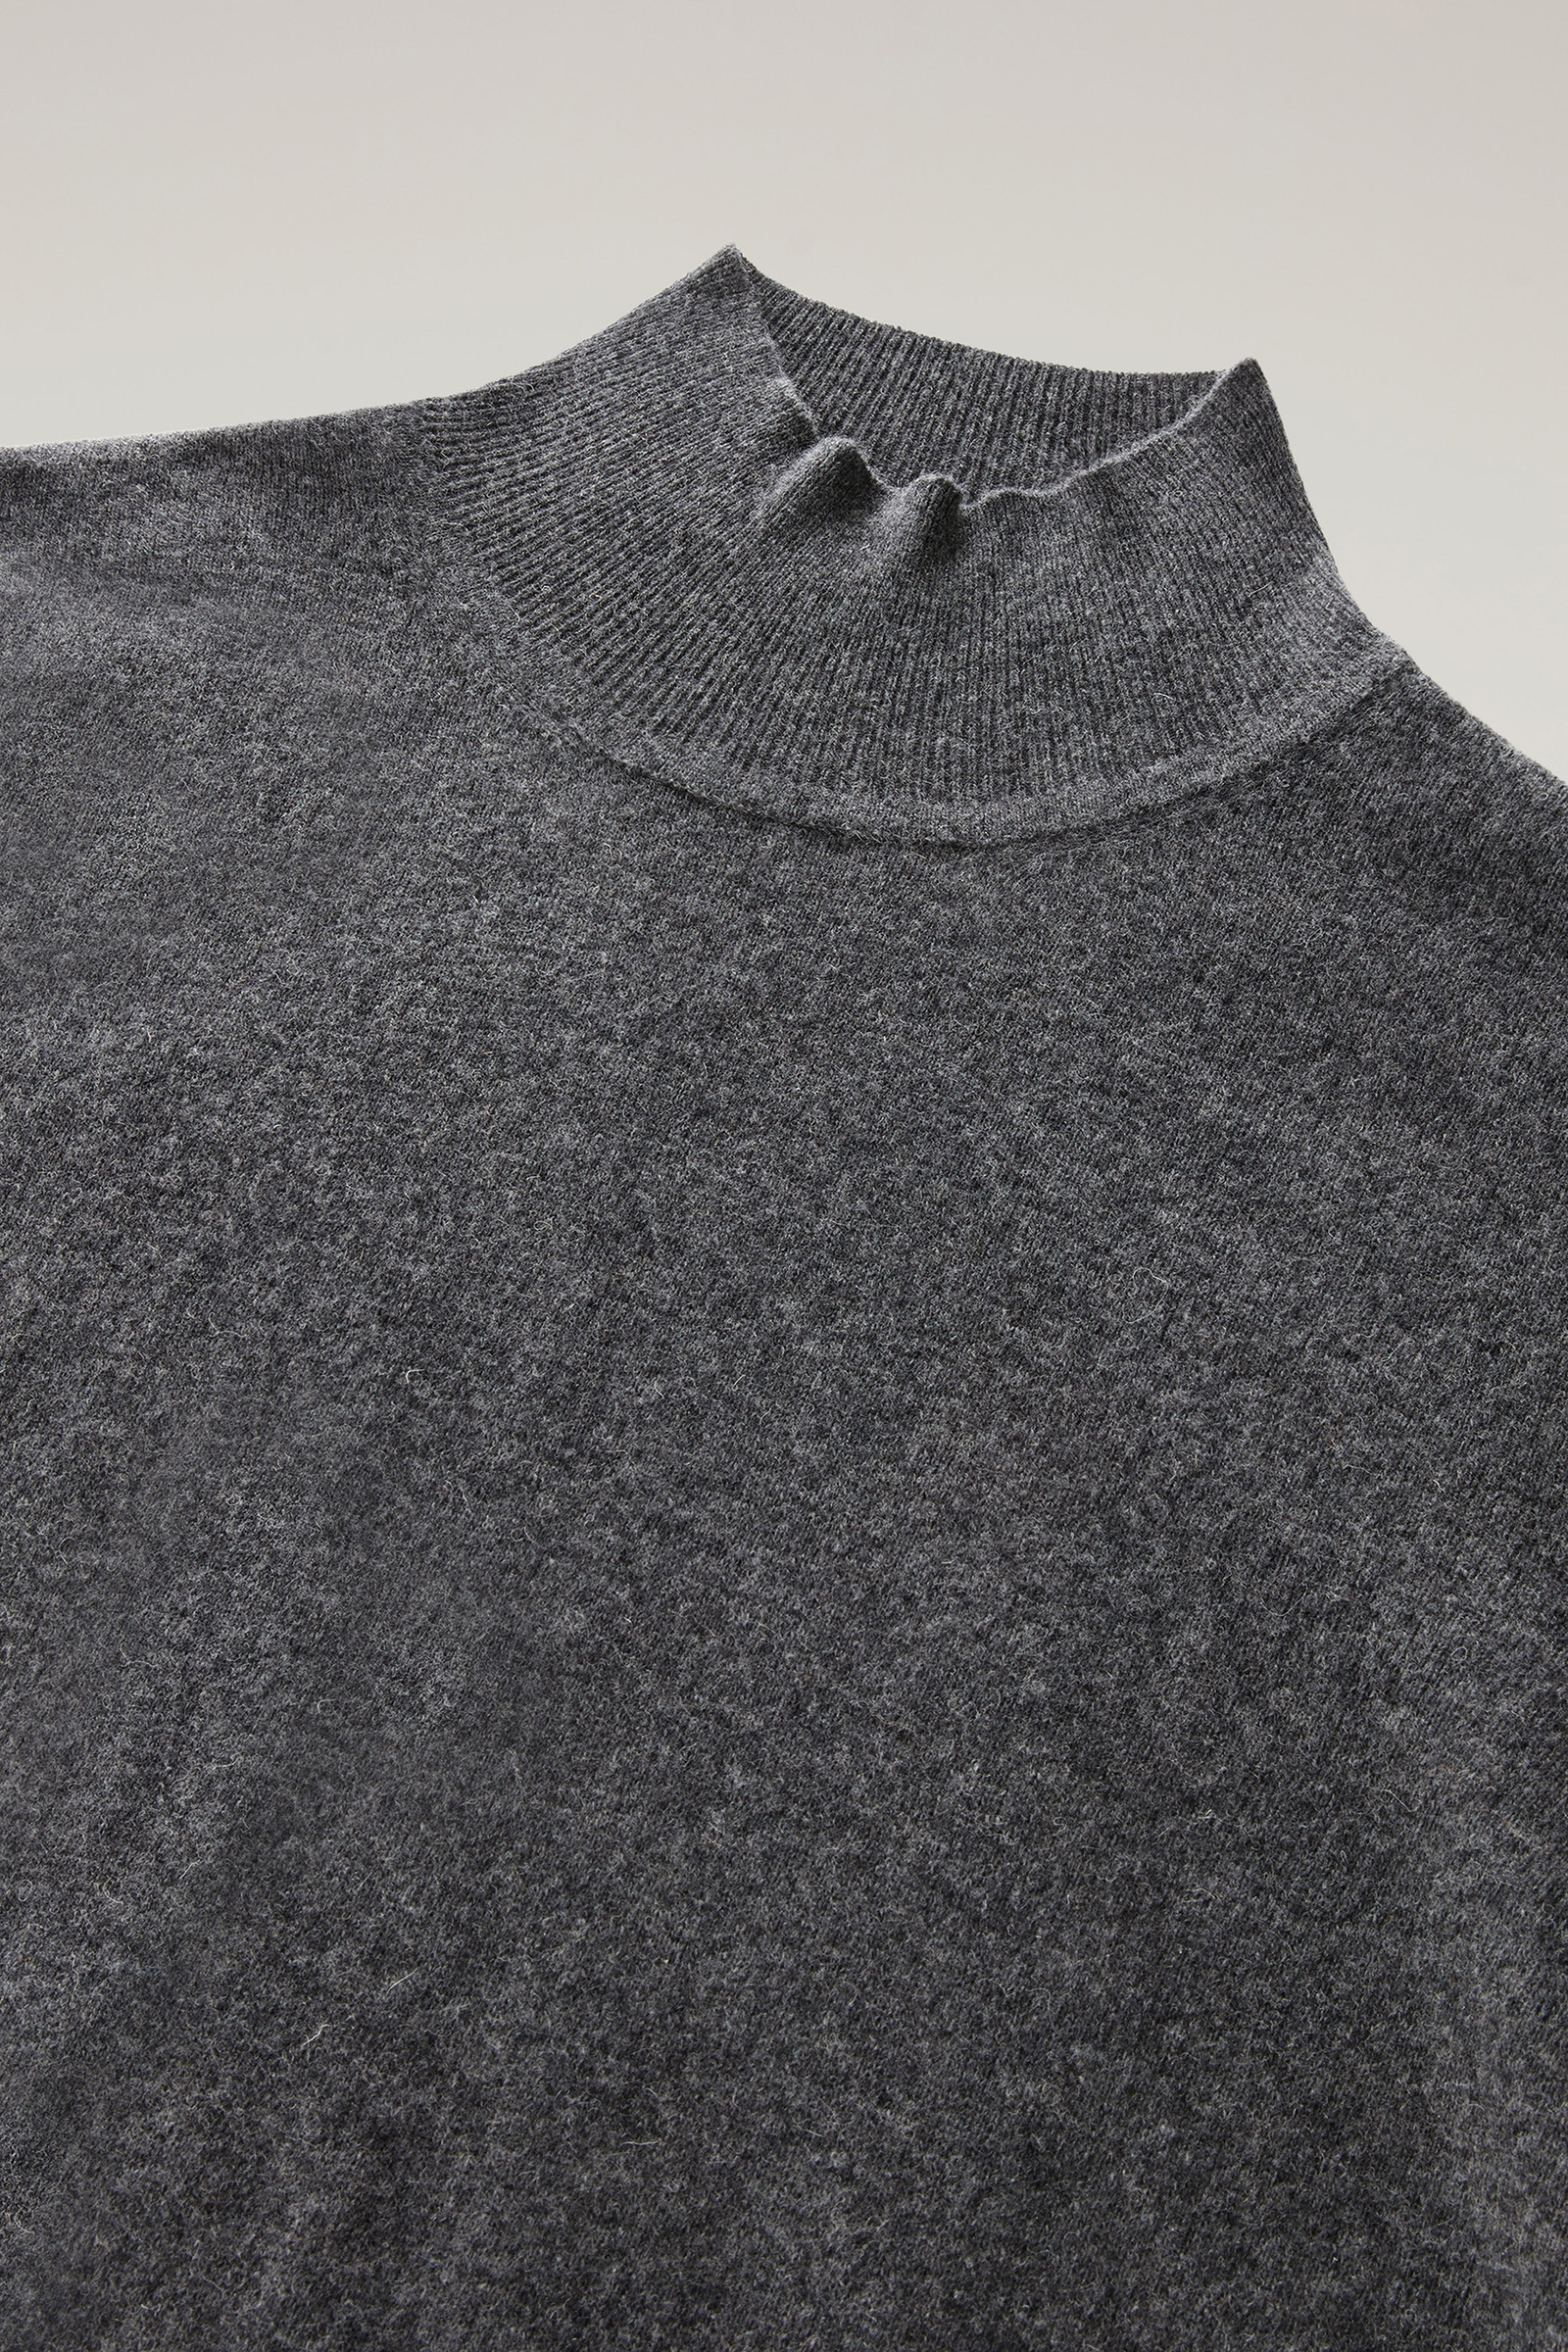 Men's Turtleneck Sweater in Merino Wool Blend Grey